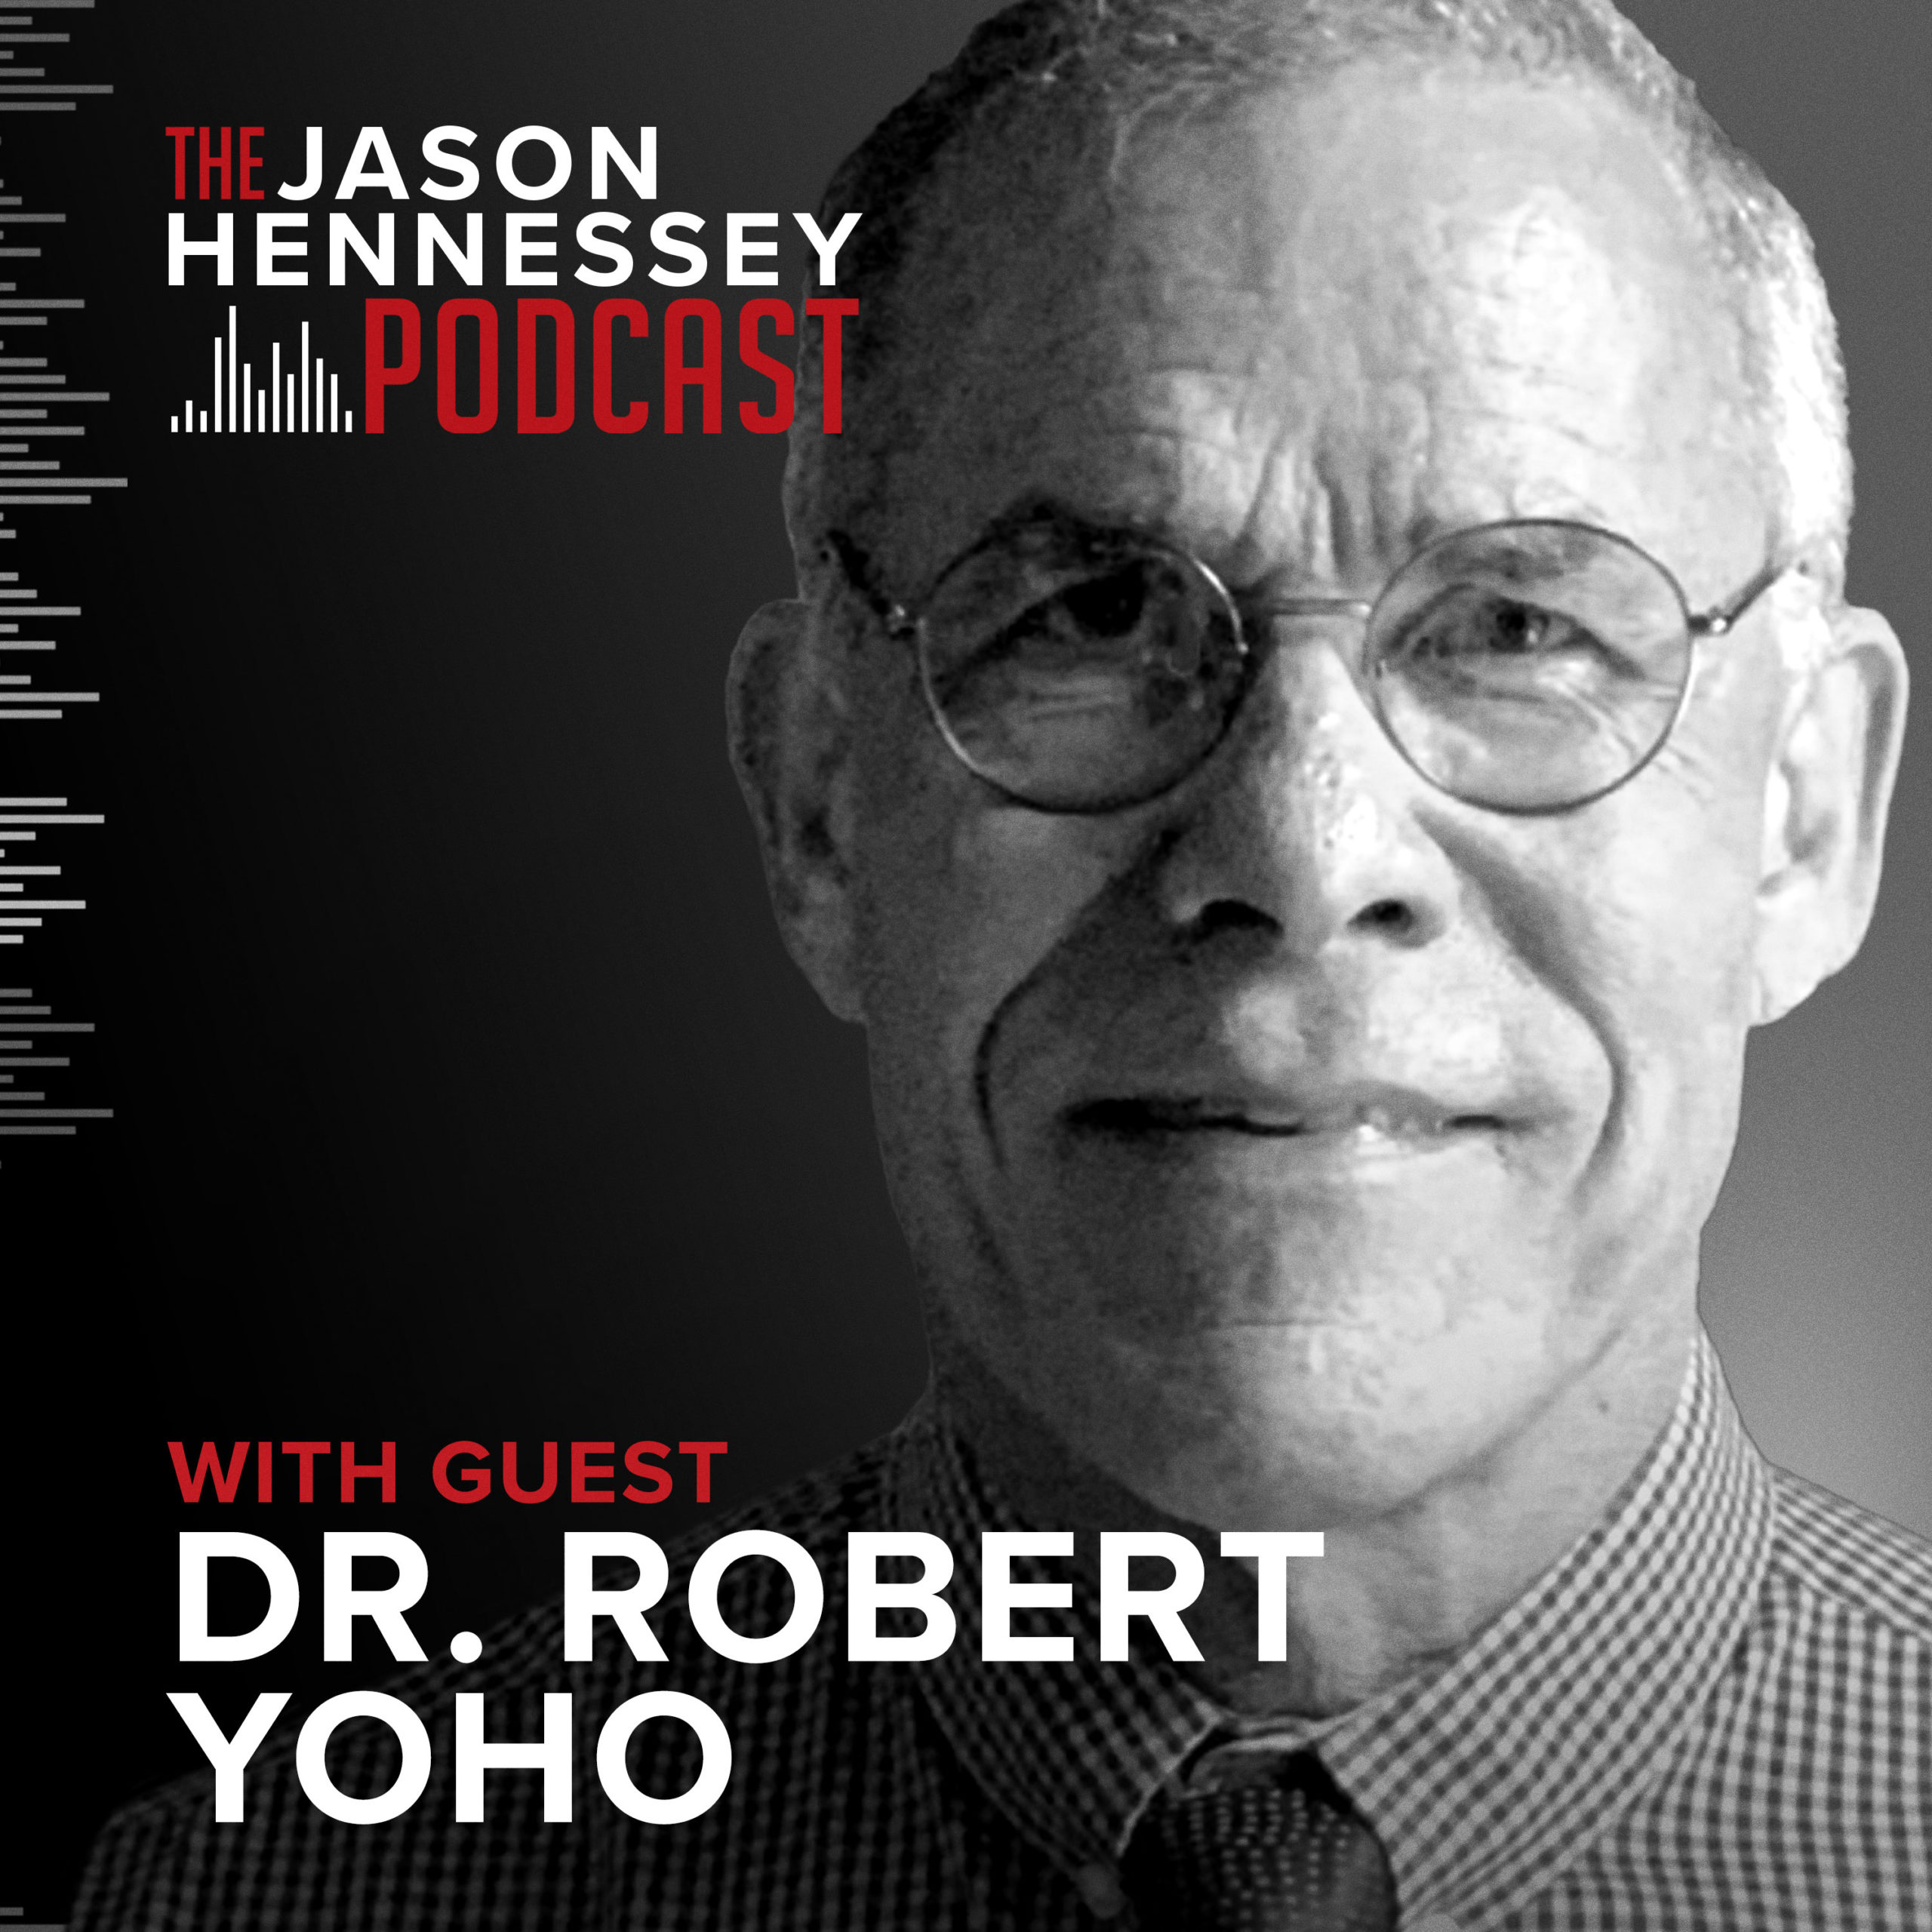 Dr. Robert Yoho